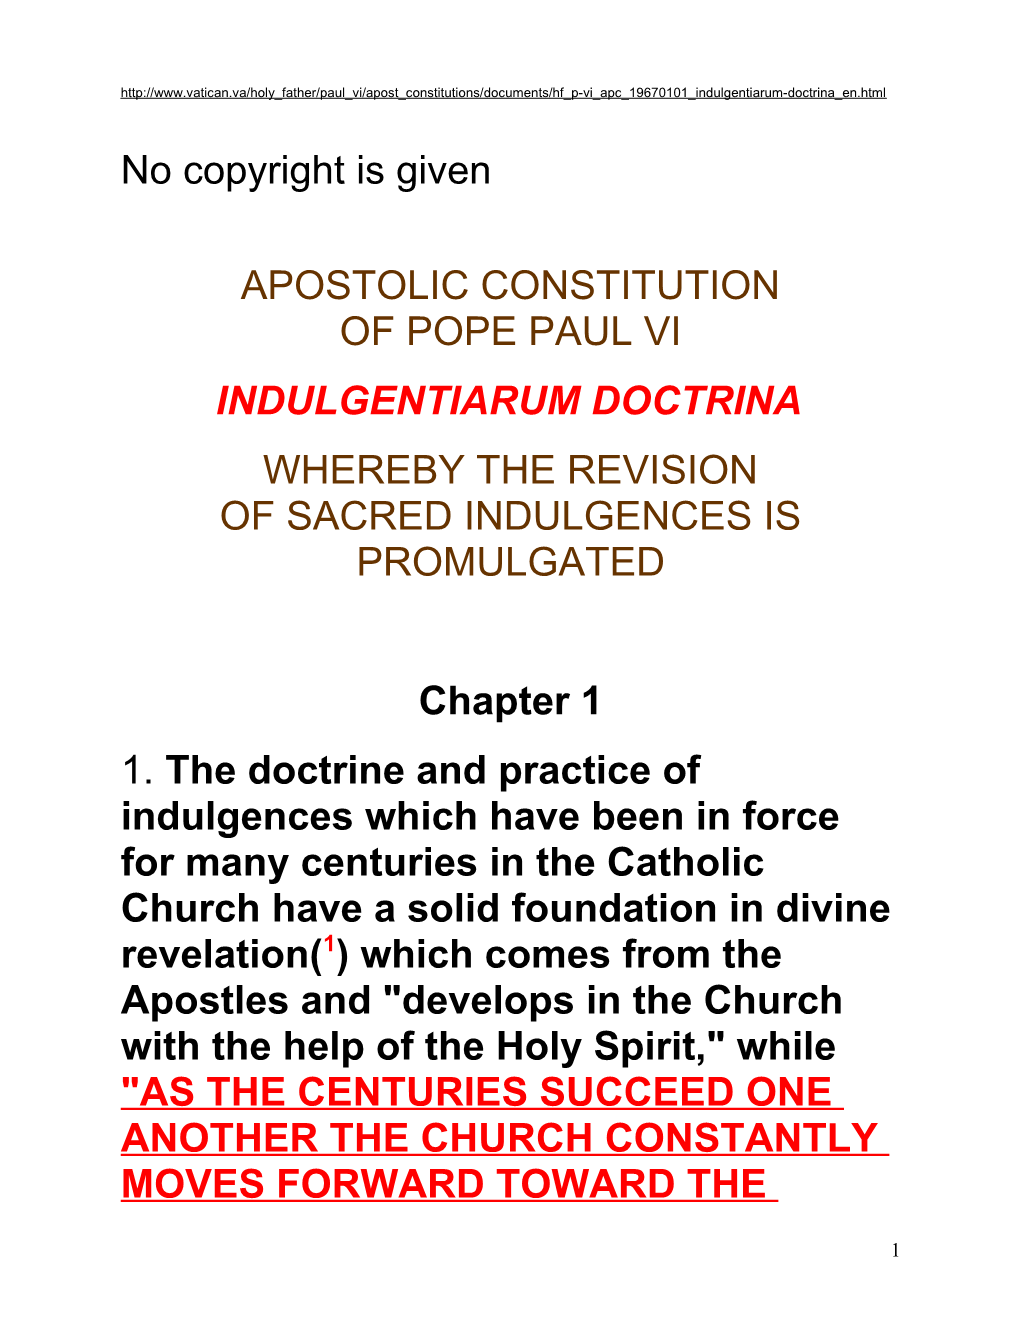 Indulgentiarum Doctrina